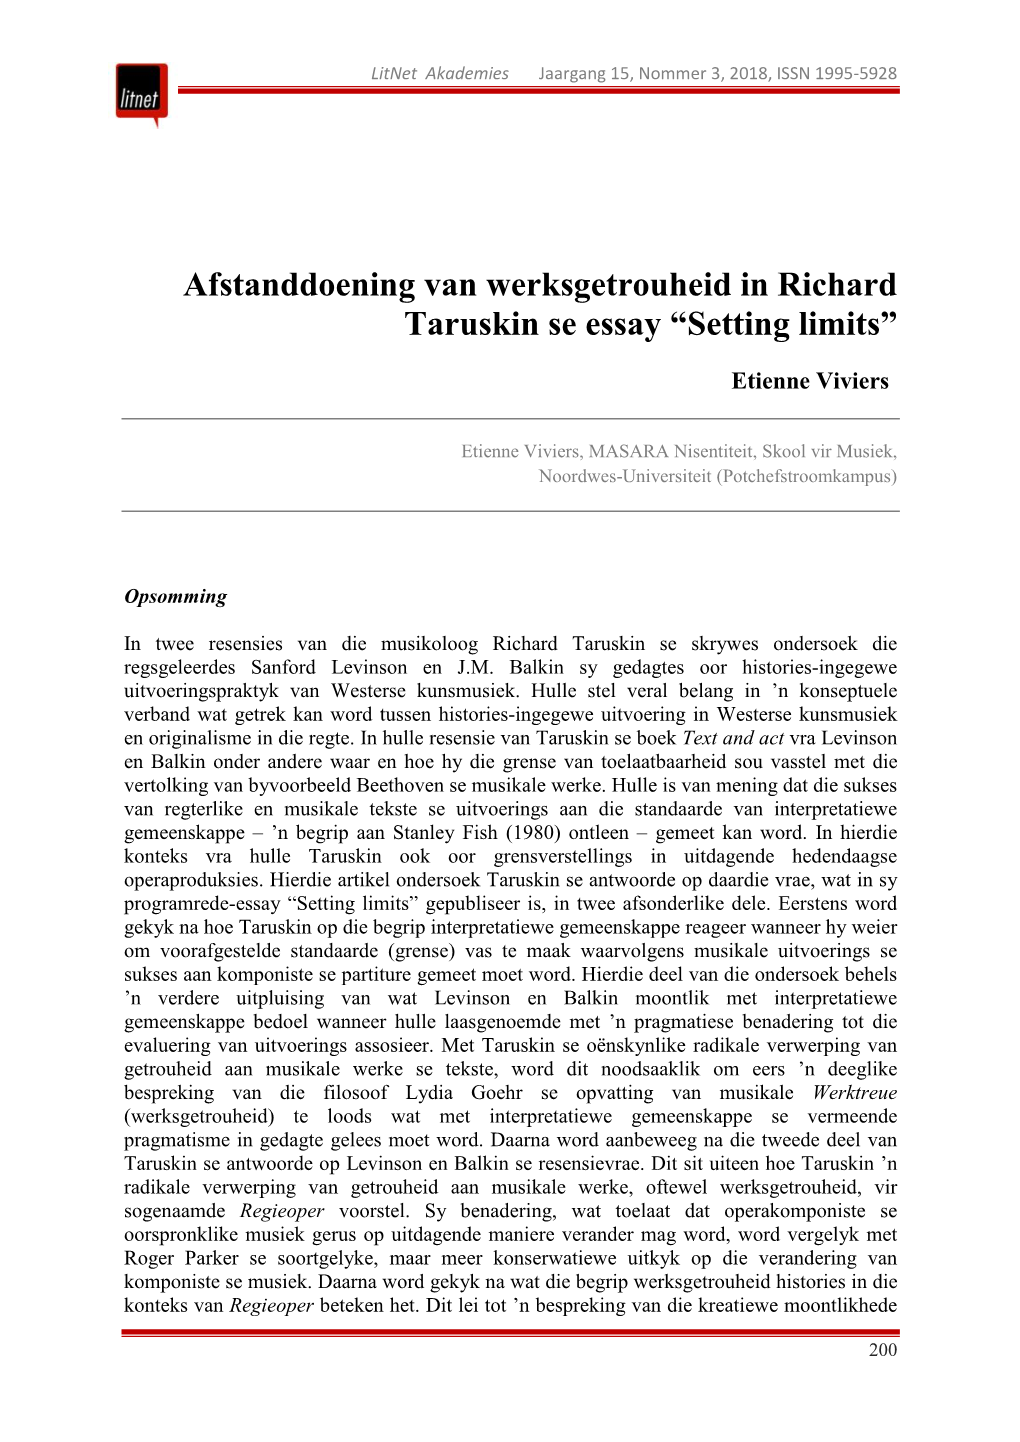 Afstanddoening Van Werksgetrouheid in Richard Taruskin Se Essay “Setting Limits”